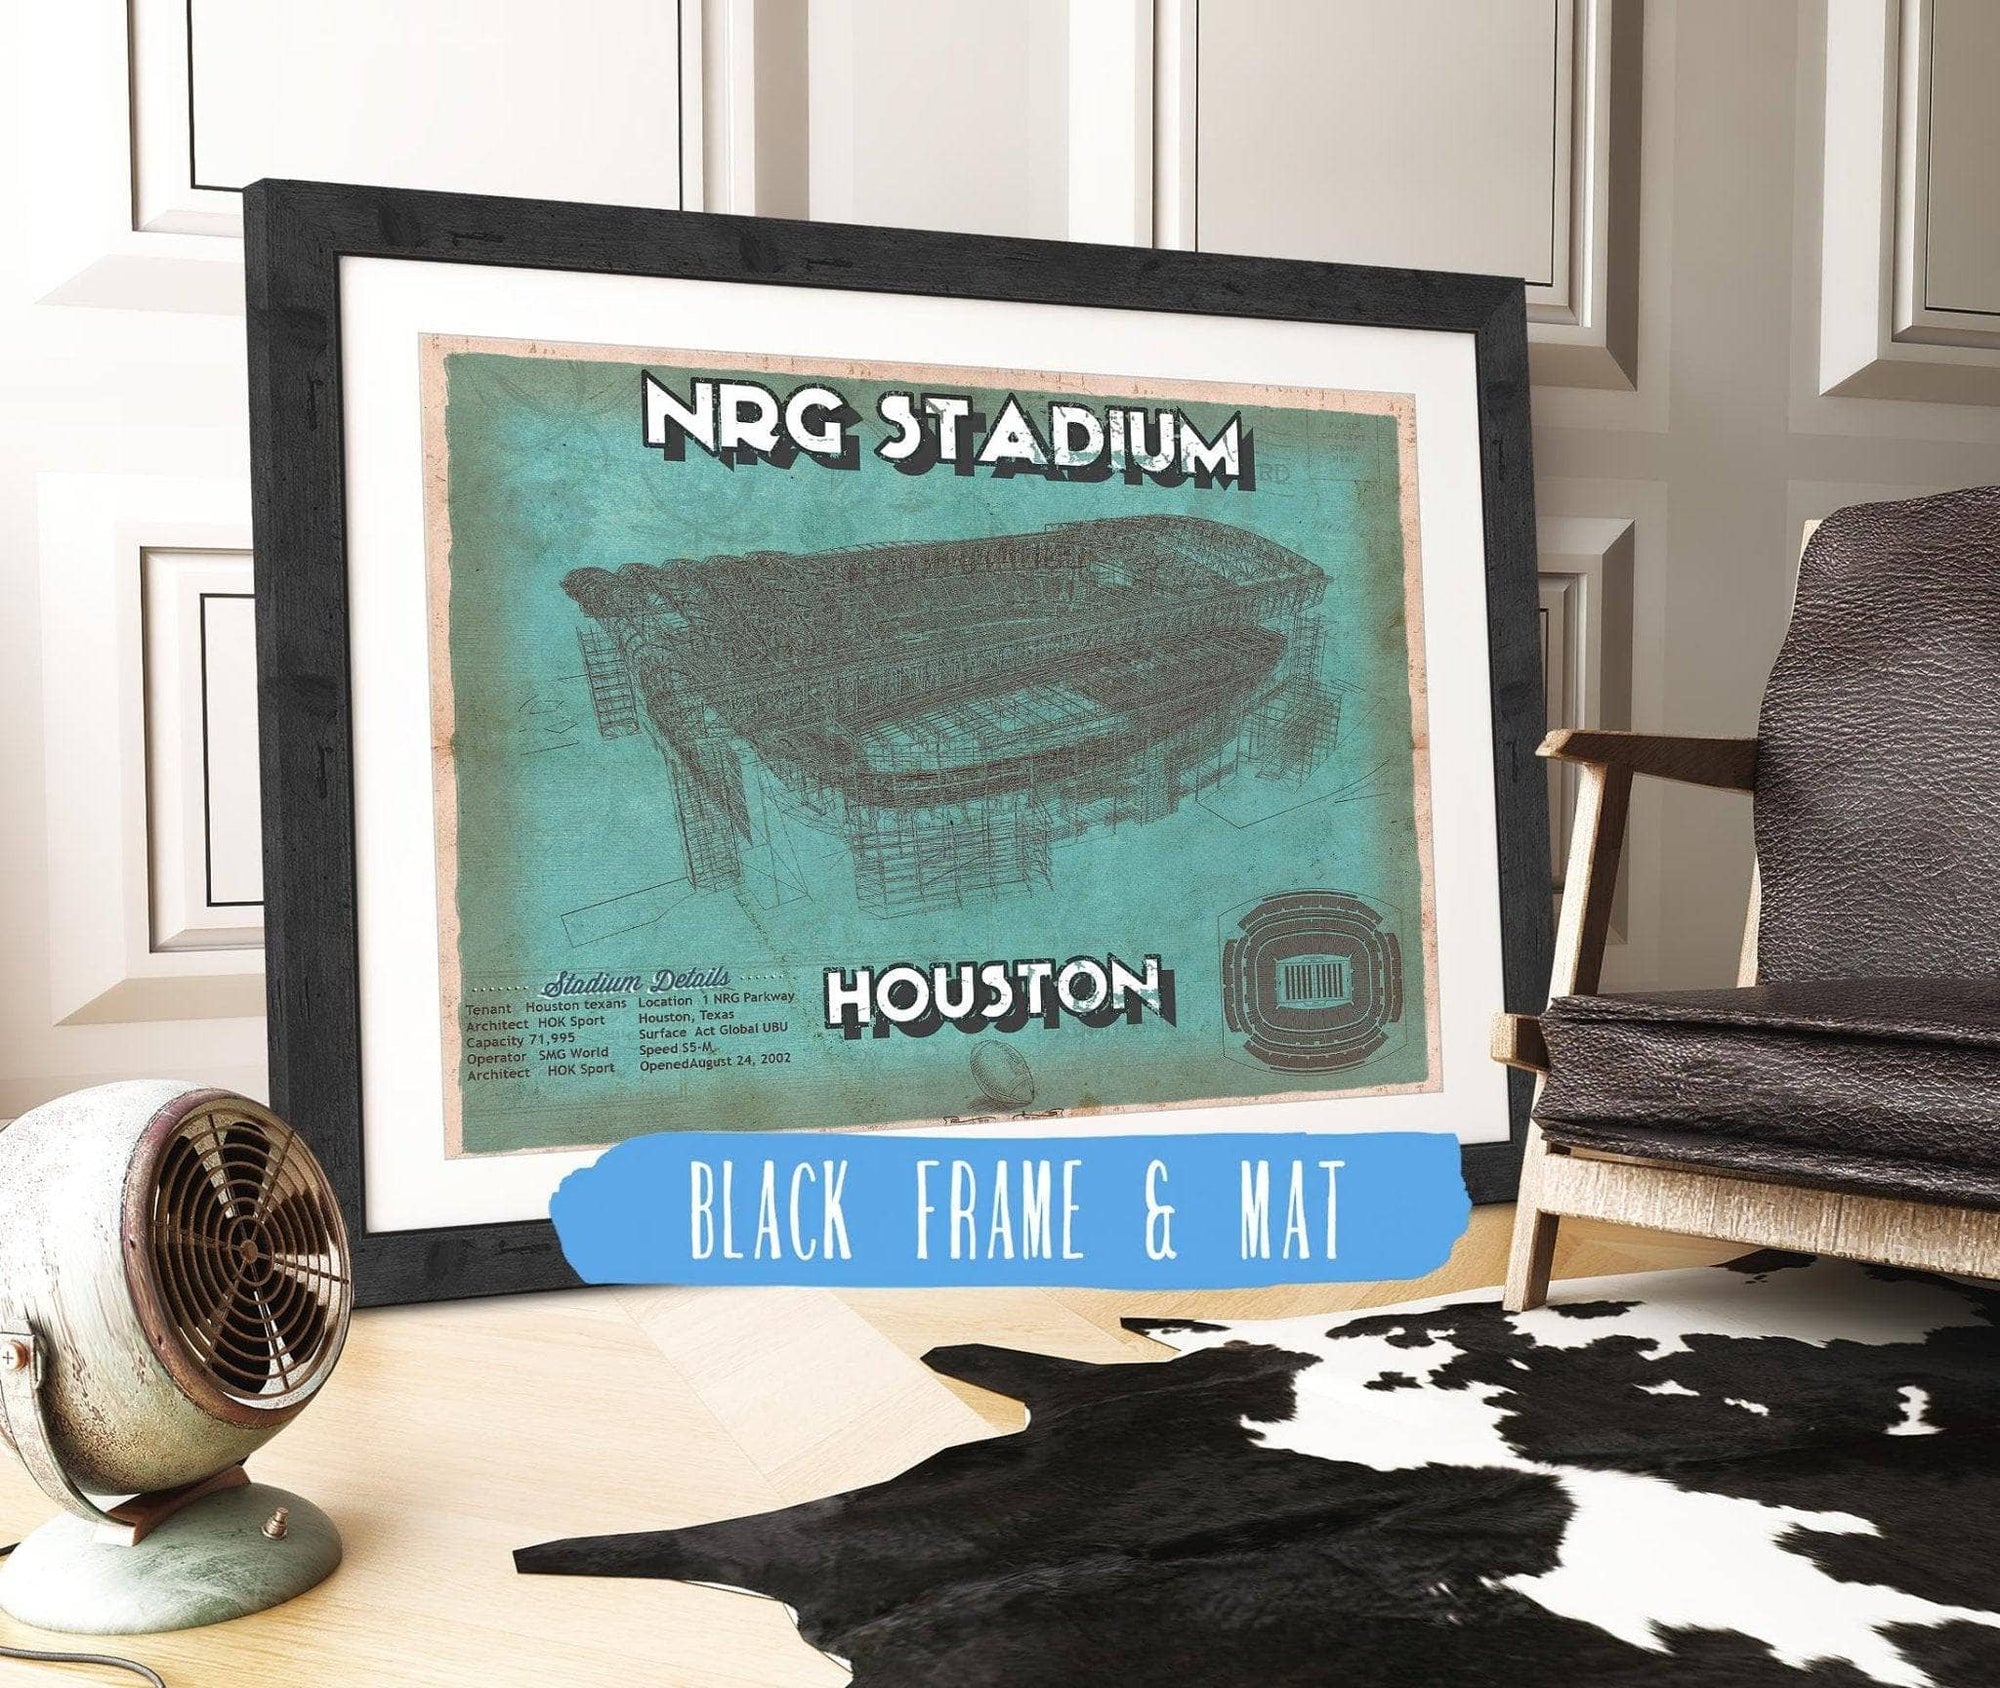 Cutler West Pro Football Collection 14" x 11" / Black Frame & Mat Houston Texans NRG Stadium Vintage Football Print 698624124_70627